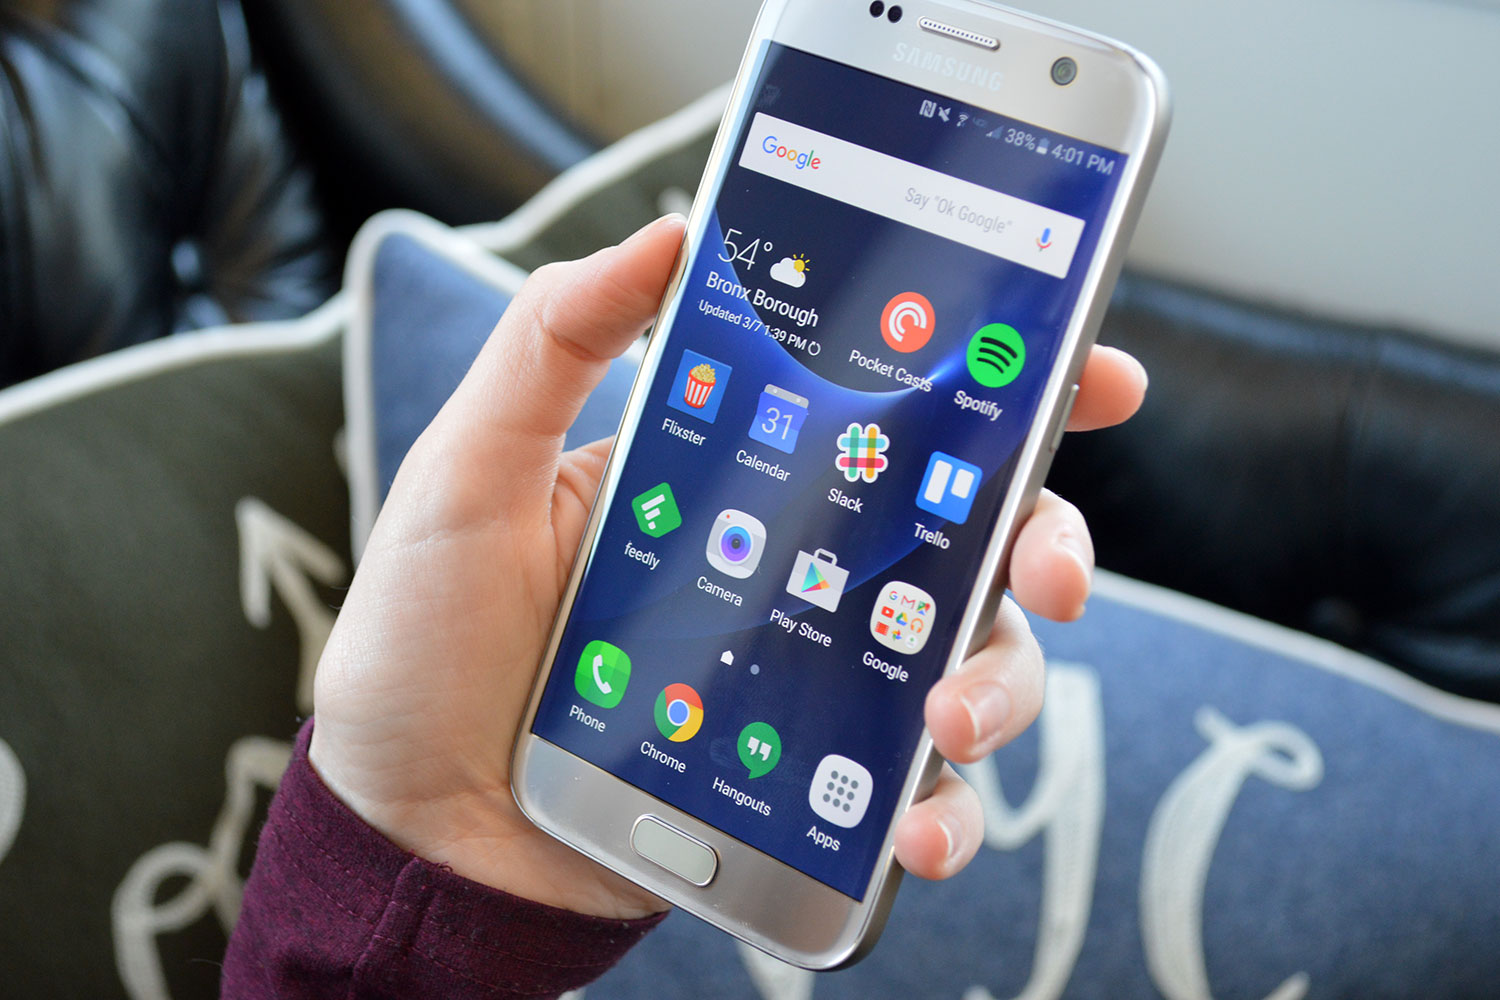 Vermomd Uittrekken medaillewinnaar Galaxy S7 Review | Specs, Availability, and Price | Digital Trends